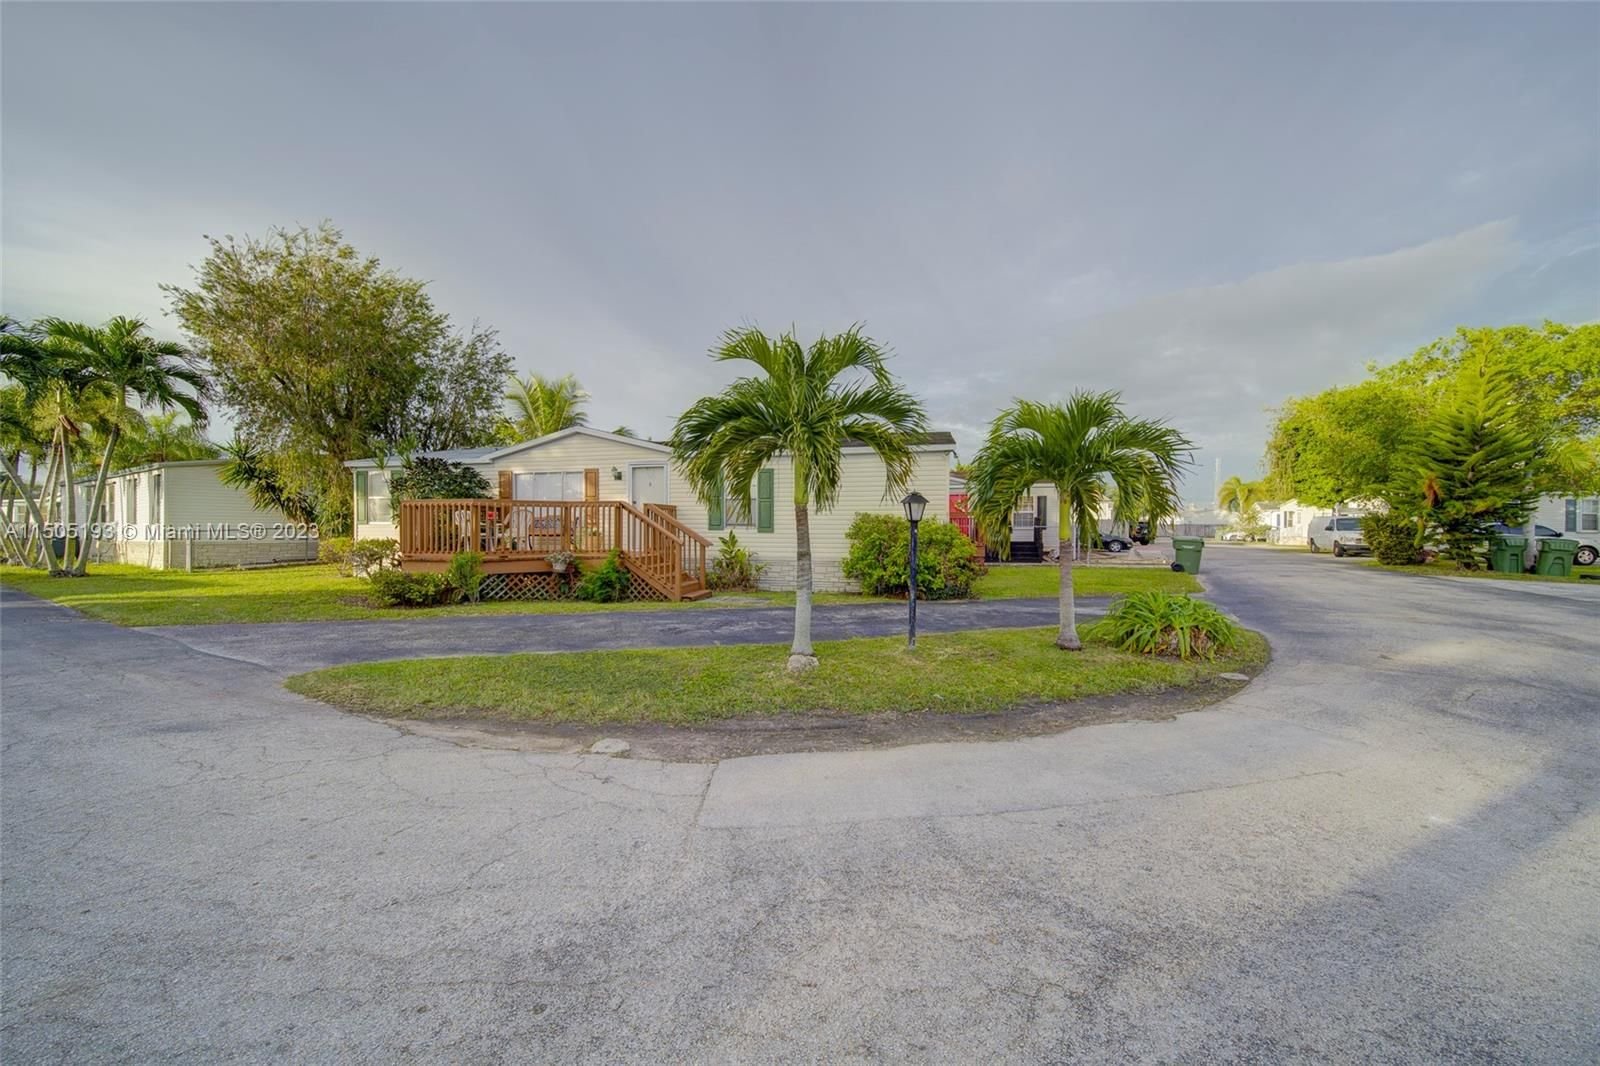 Real estate property located at 220 12th Ave, Miami-Dade County, COCOWALK ESTATES, Homestead, FL